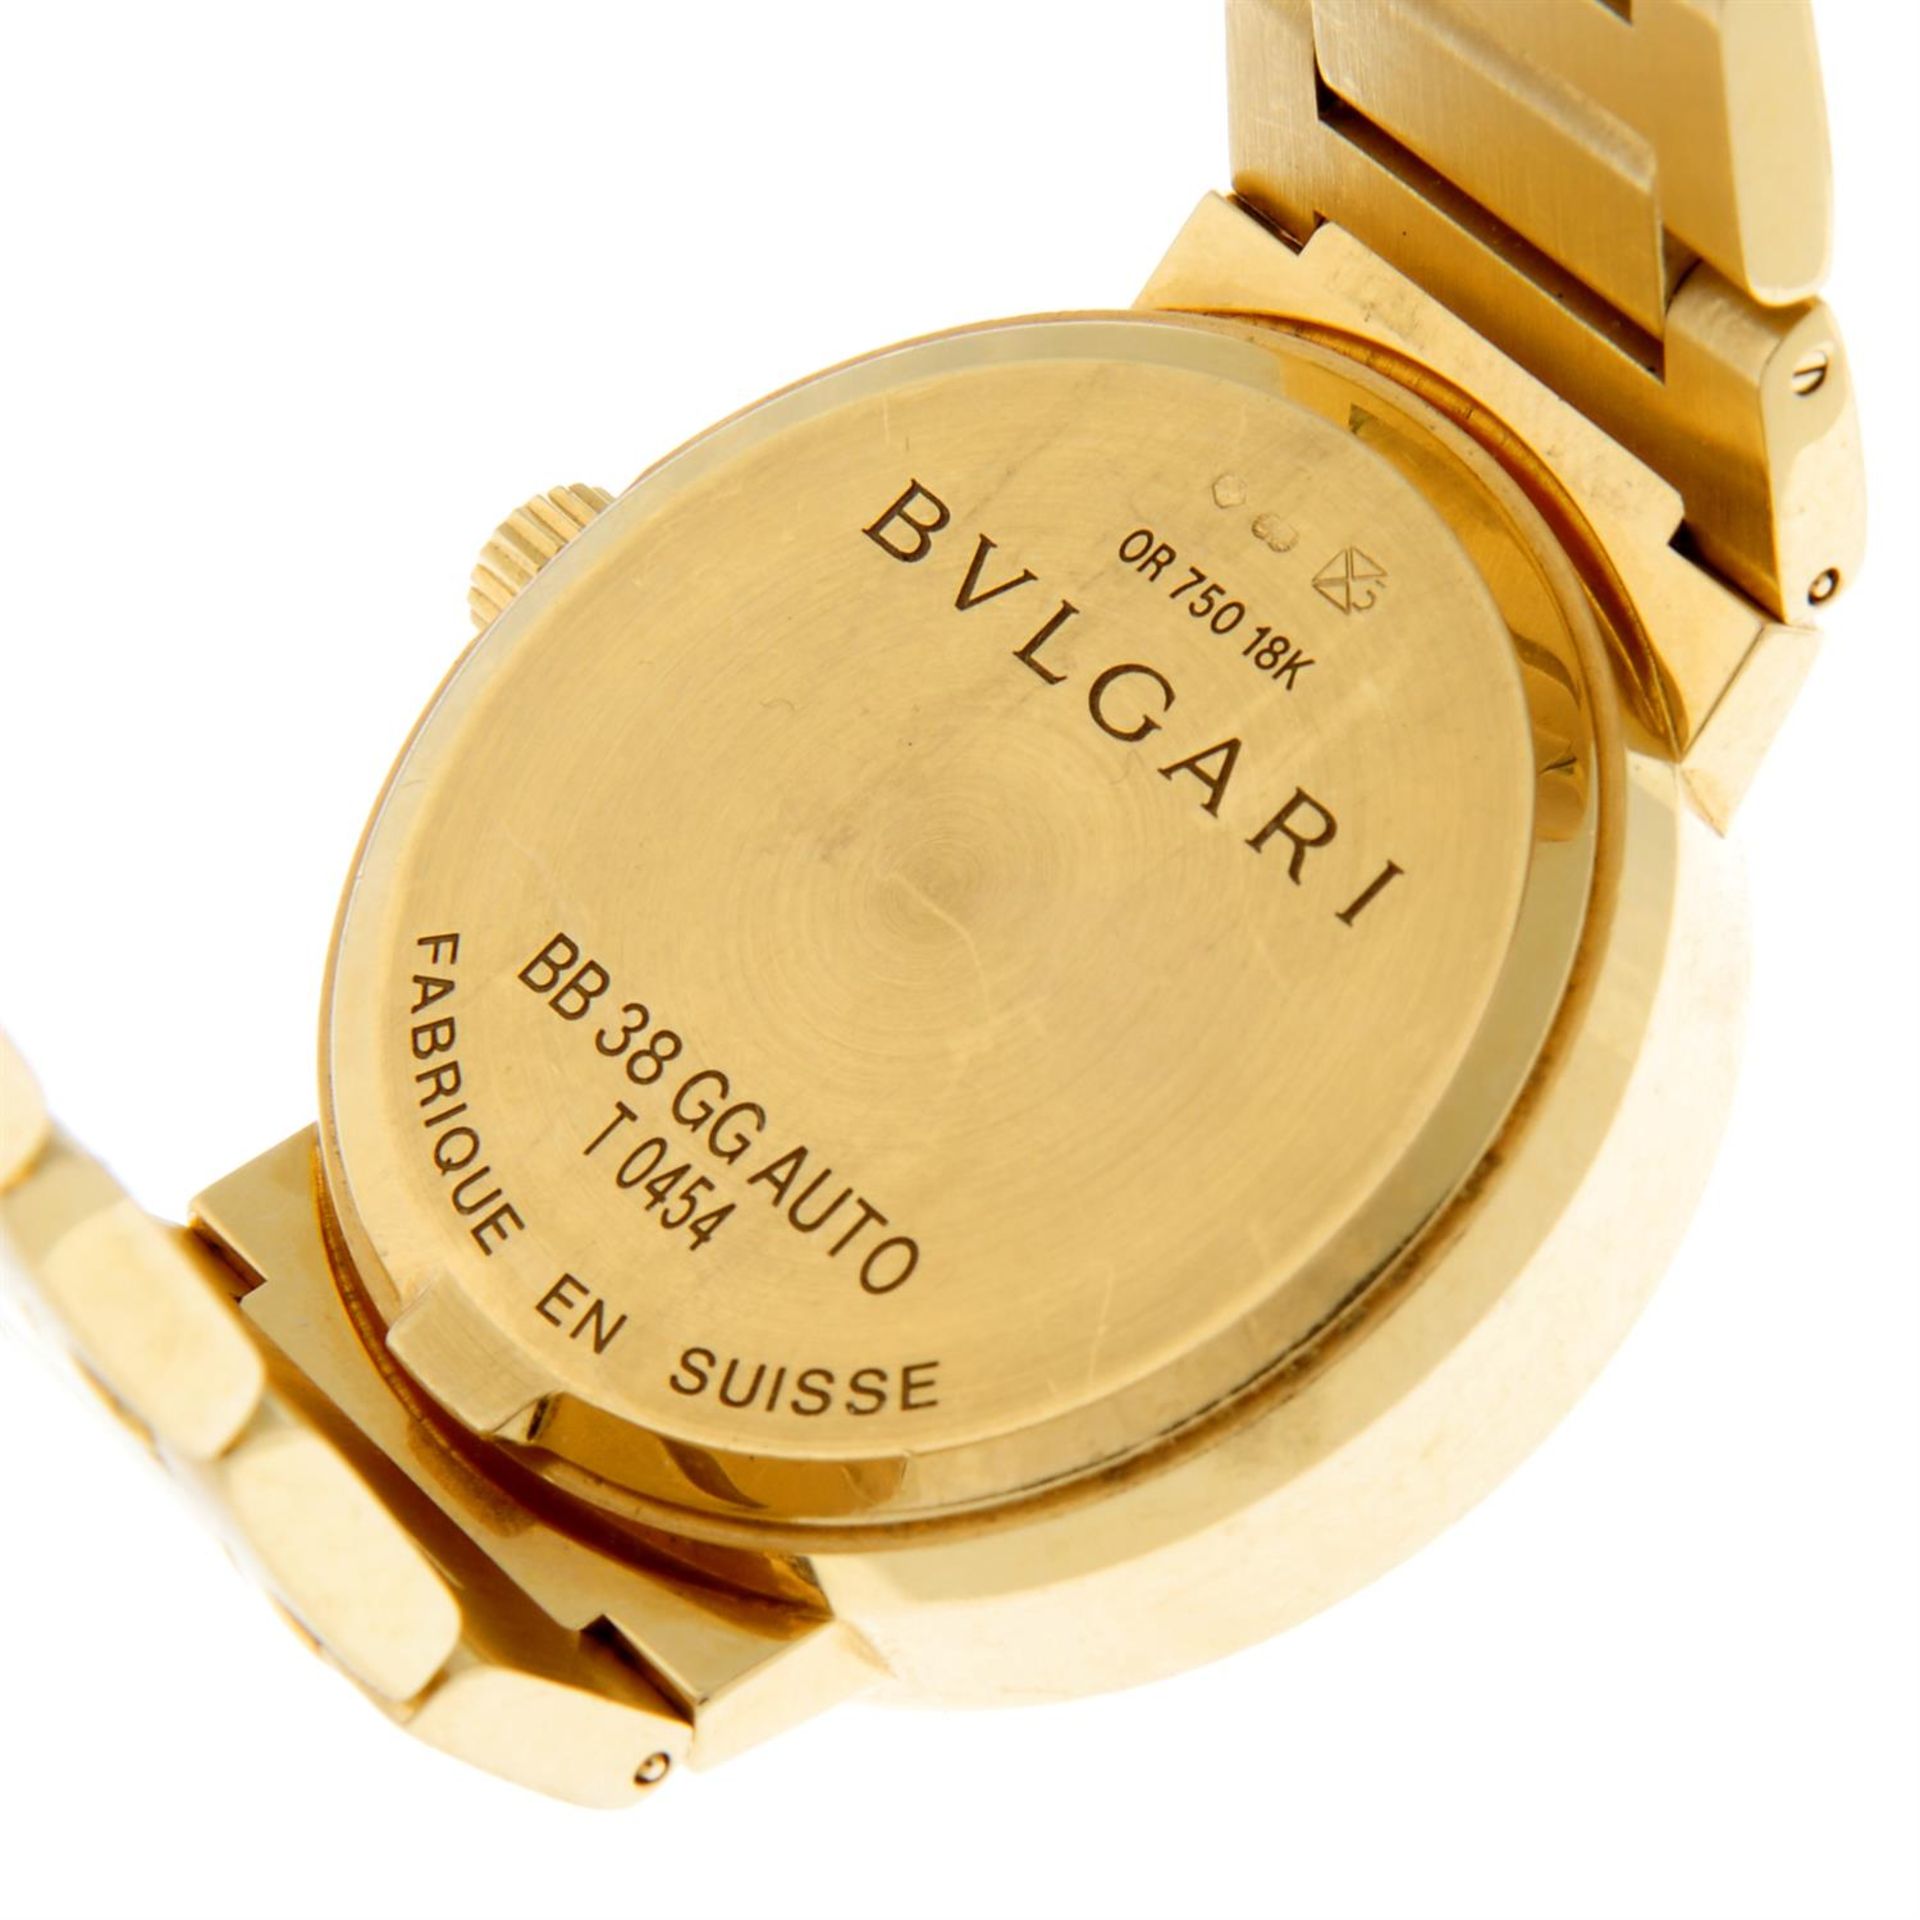 BULGARI - an 18ct yellow gold Diagono bracelet watch, 38mm. - Image 4 of 5